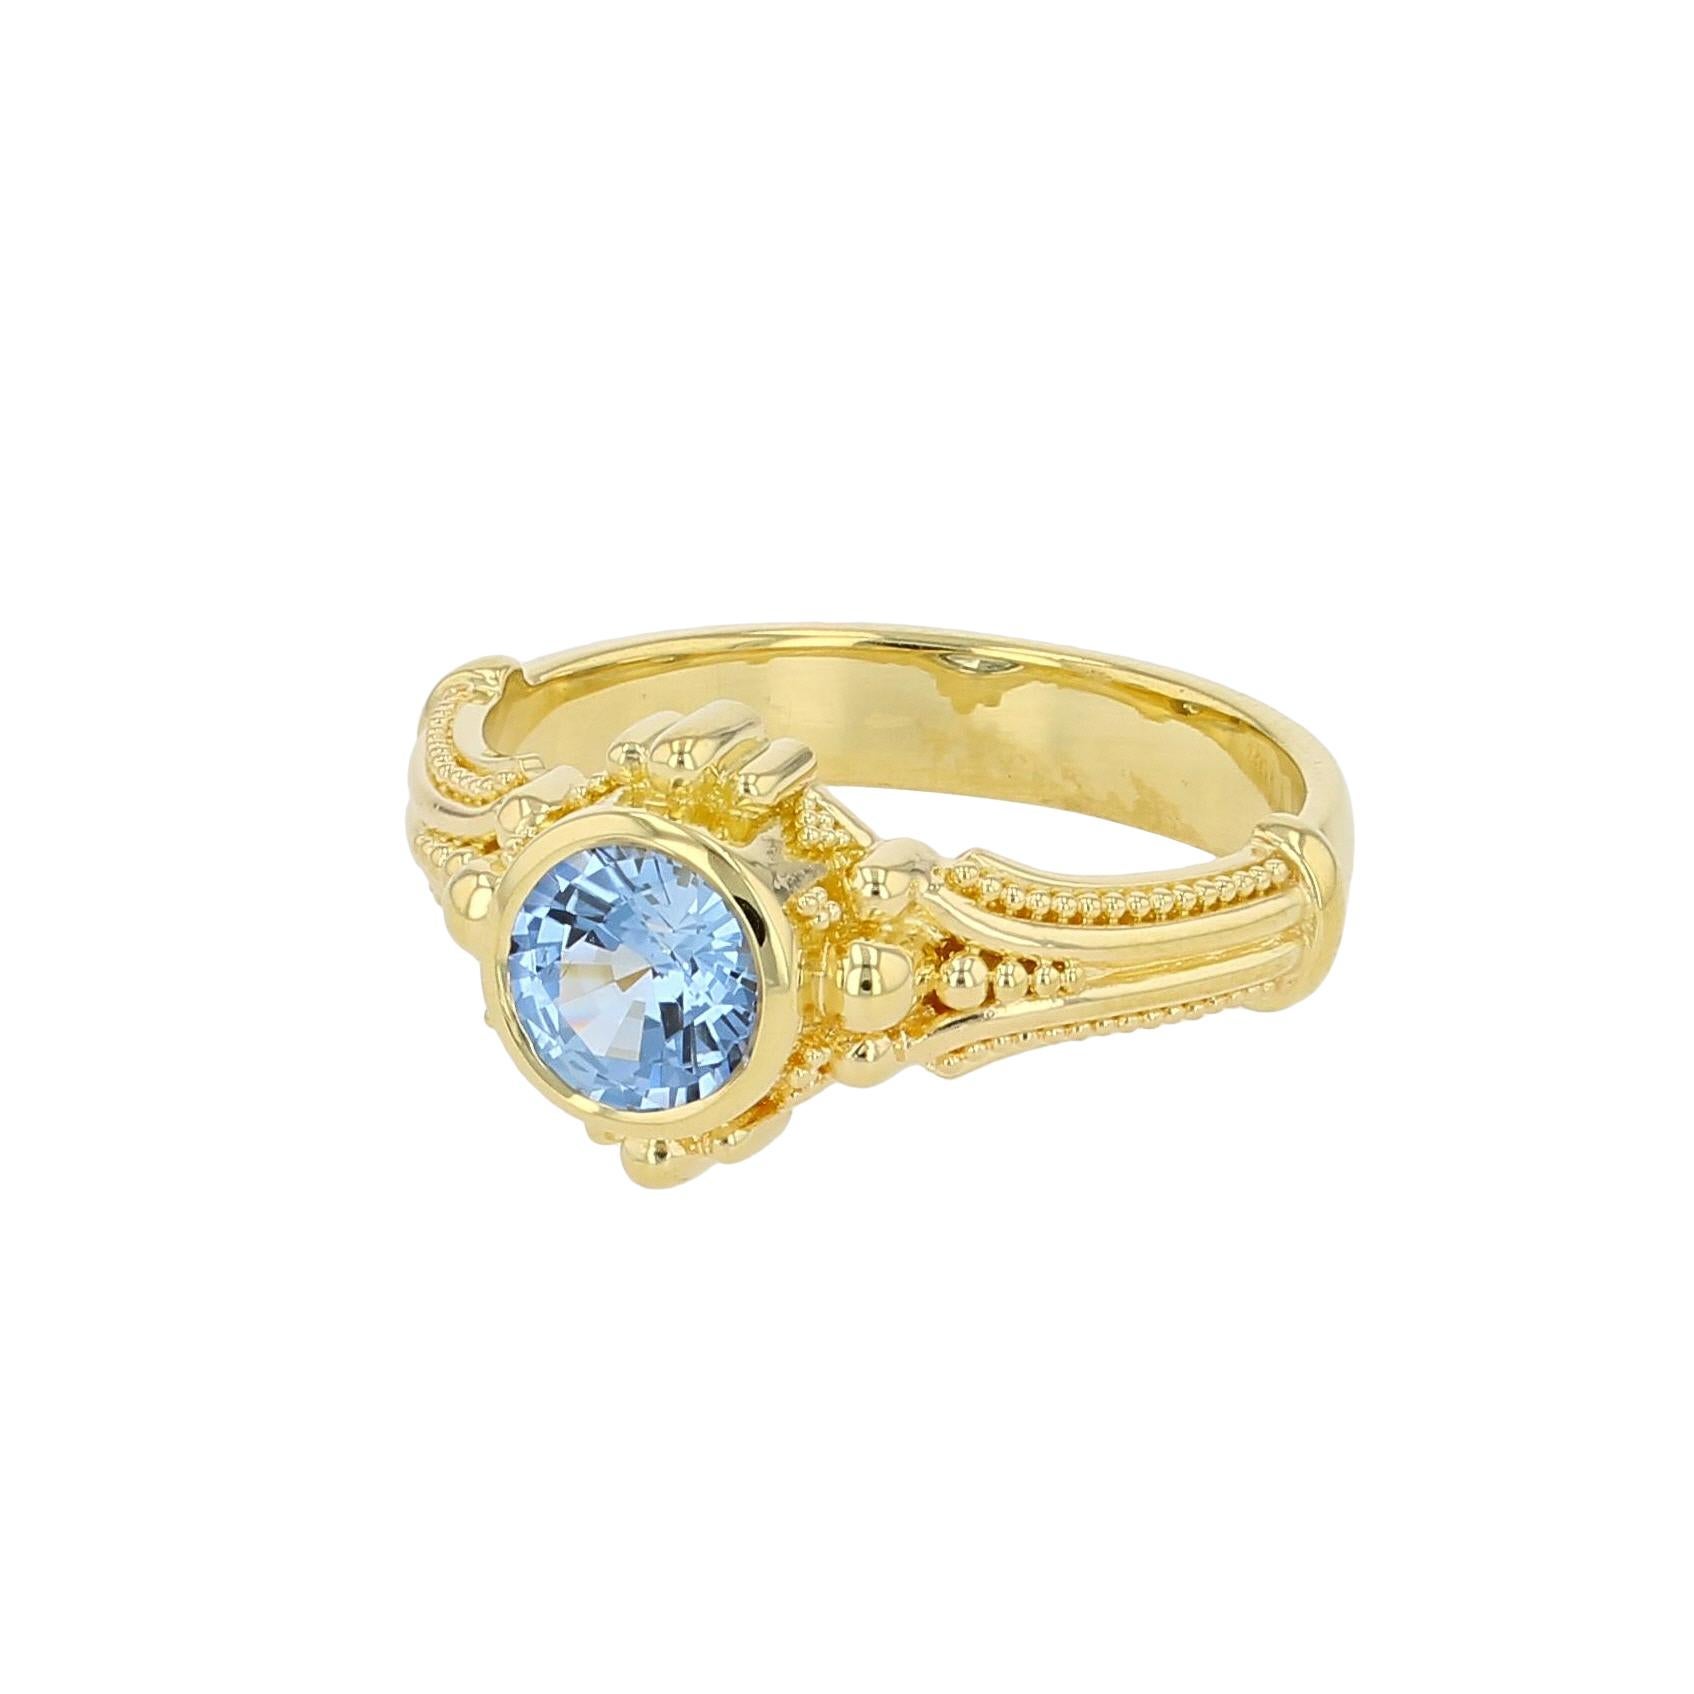 Kent Raible 18 Karat Gold Solitare Ring with Natural Blue Sapphire, Granulation 3